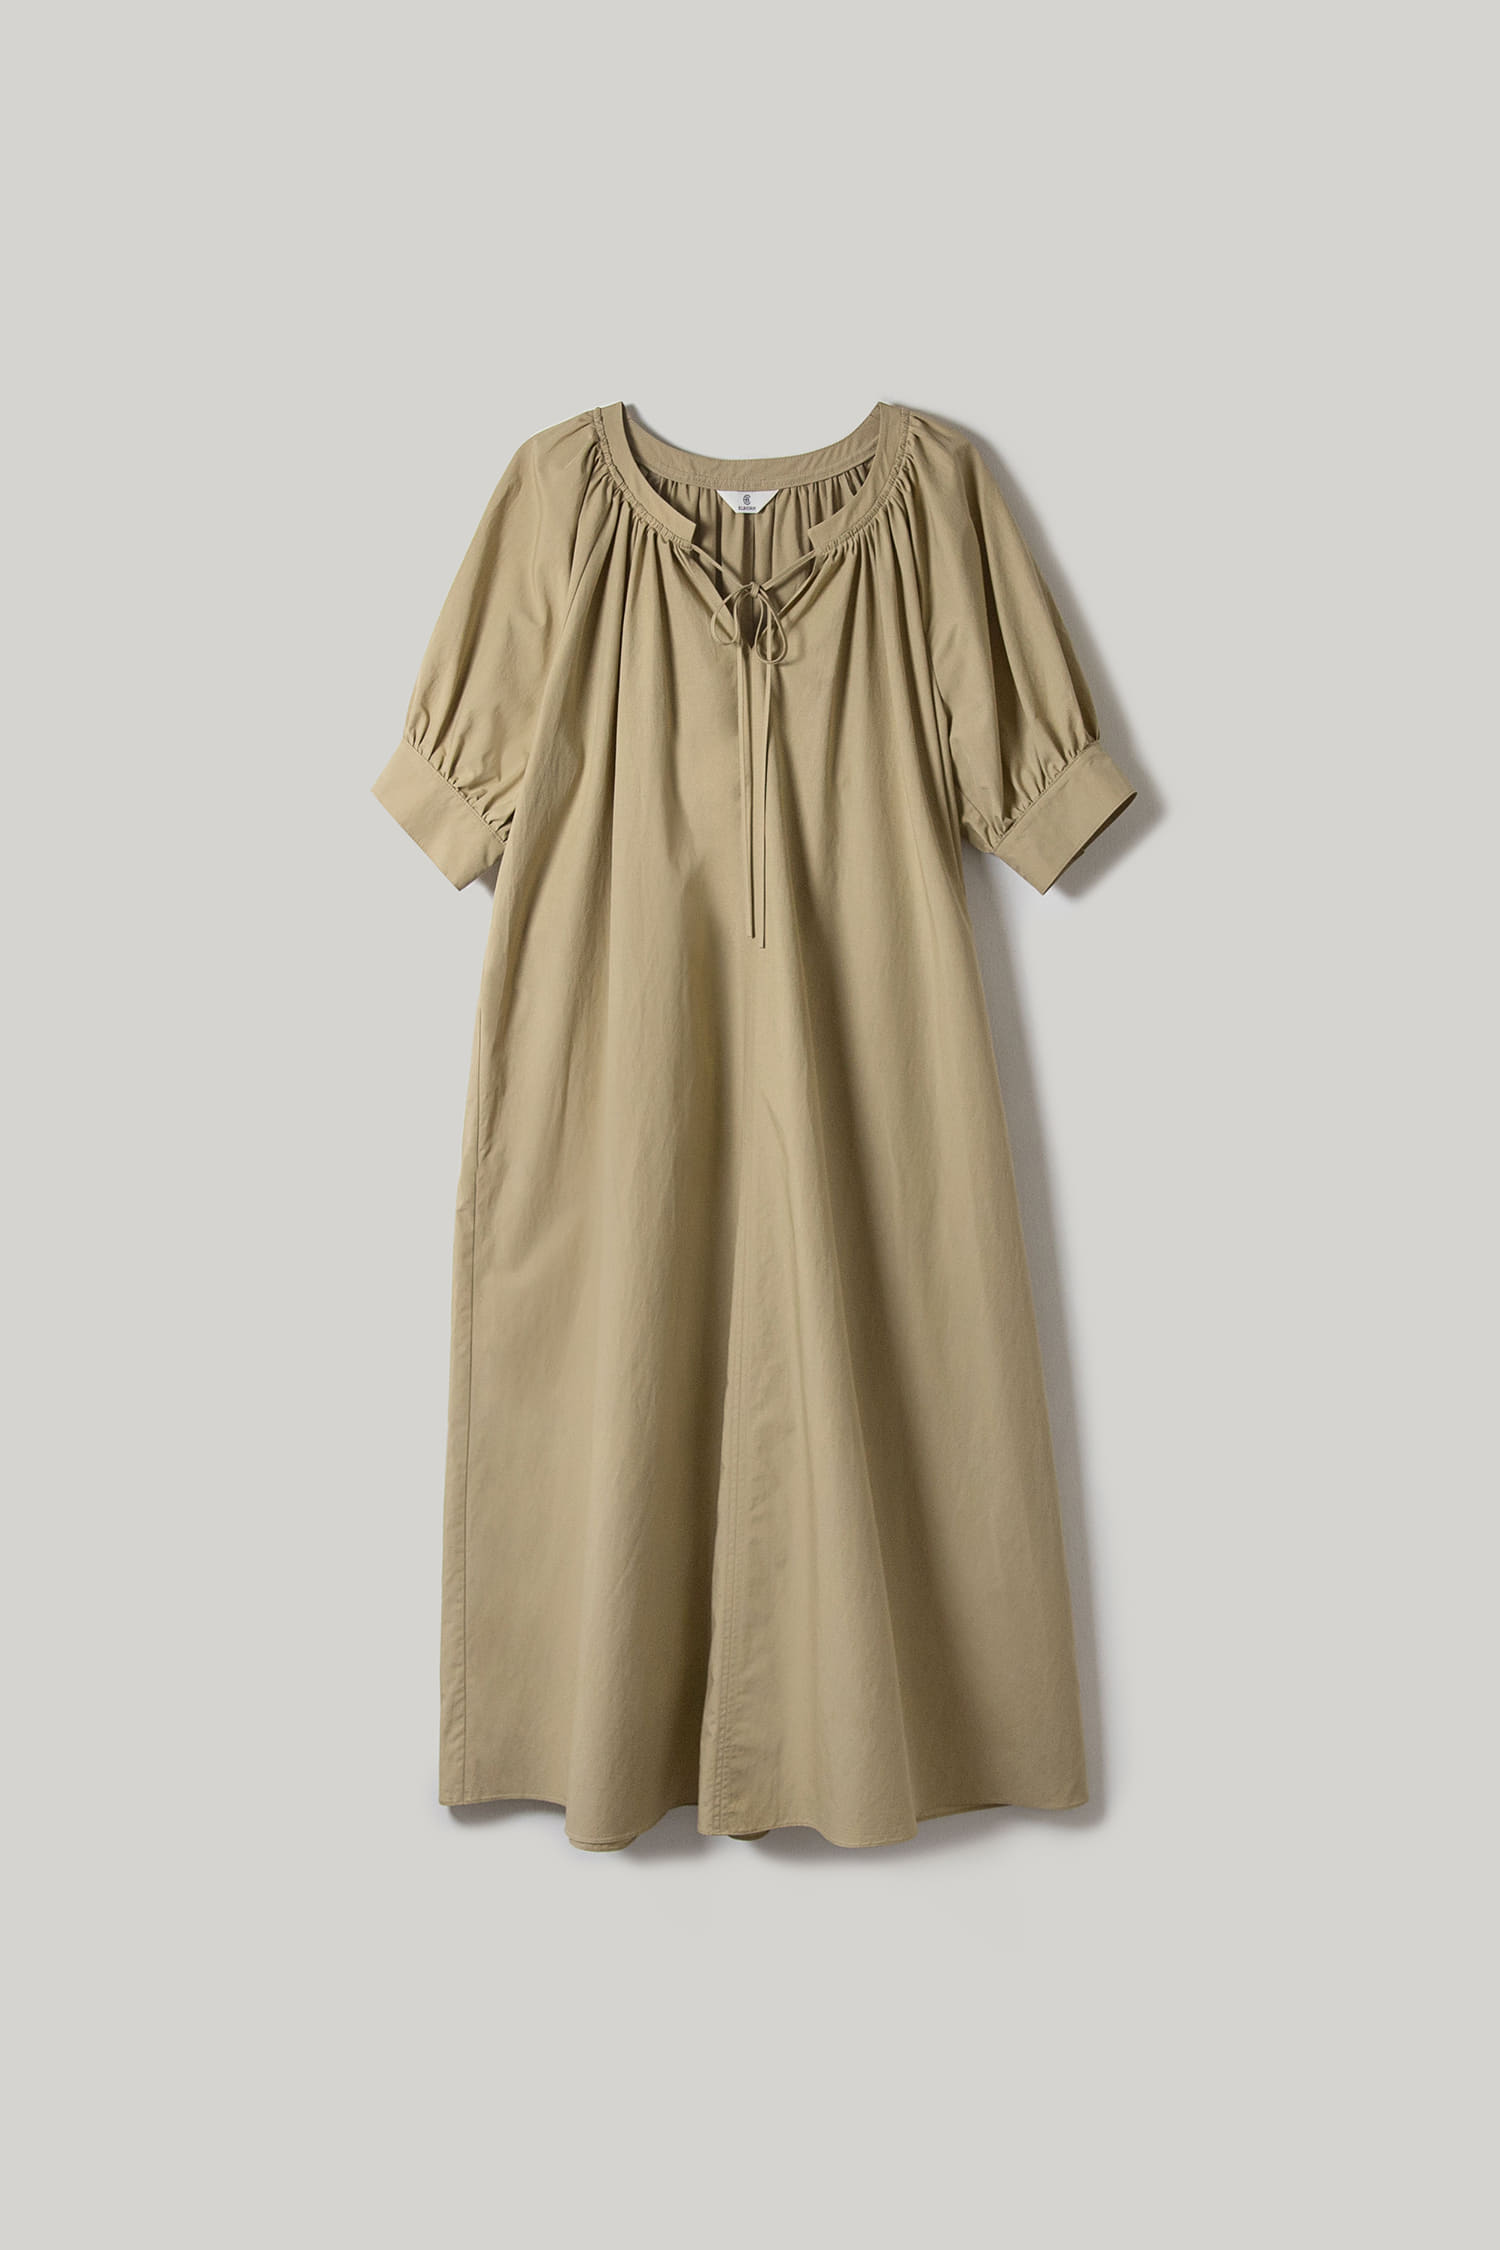 Loen Shirring Dress (2 colors)